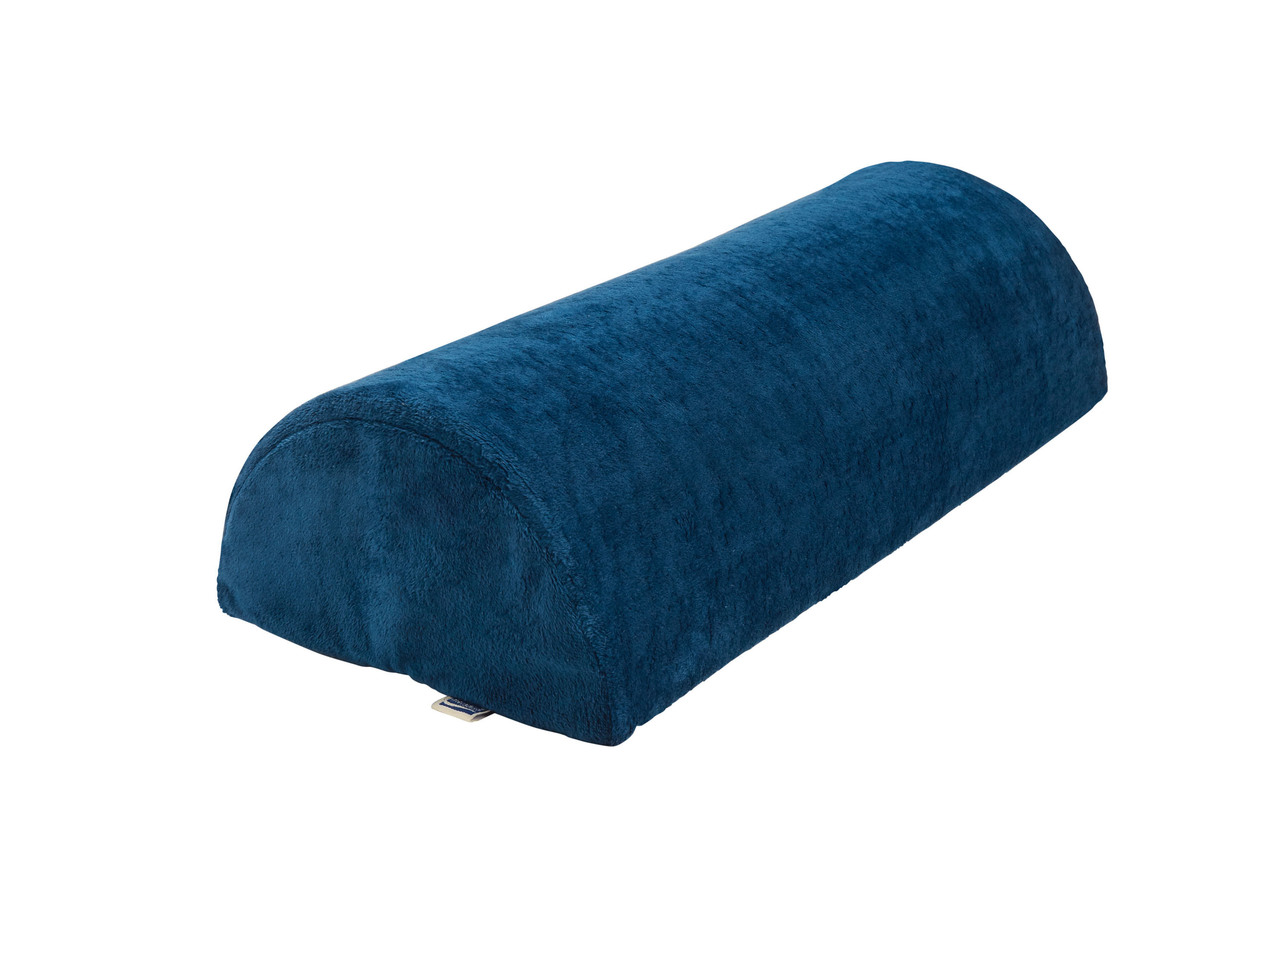 Half Roll And Neck Visco-elastic Pillow